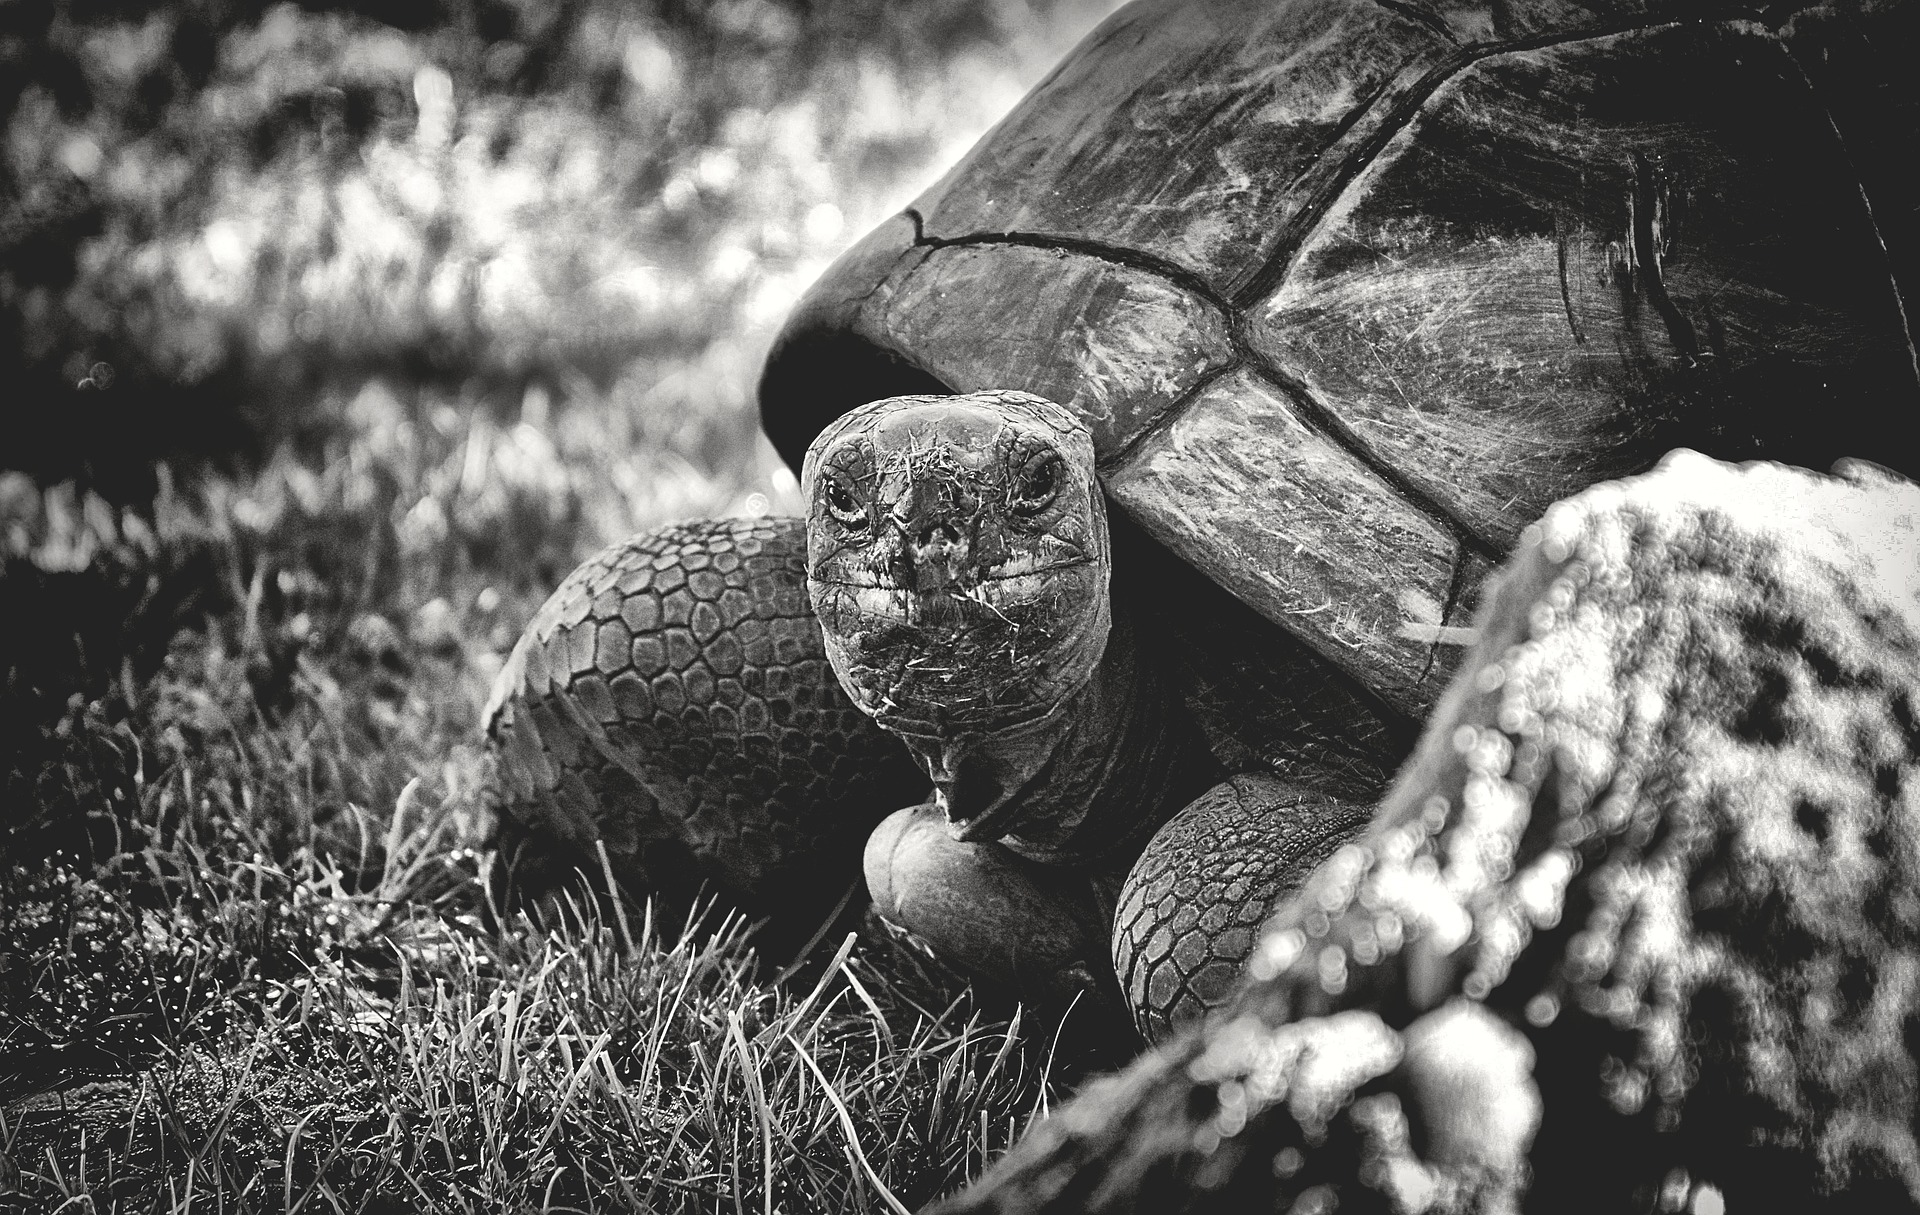 giant-tortoise-3782239_1920